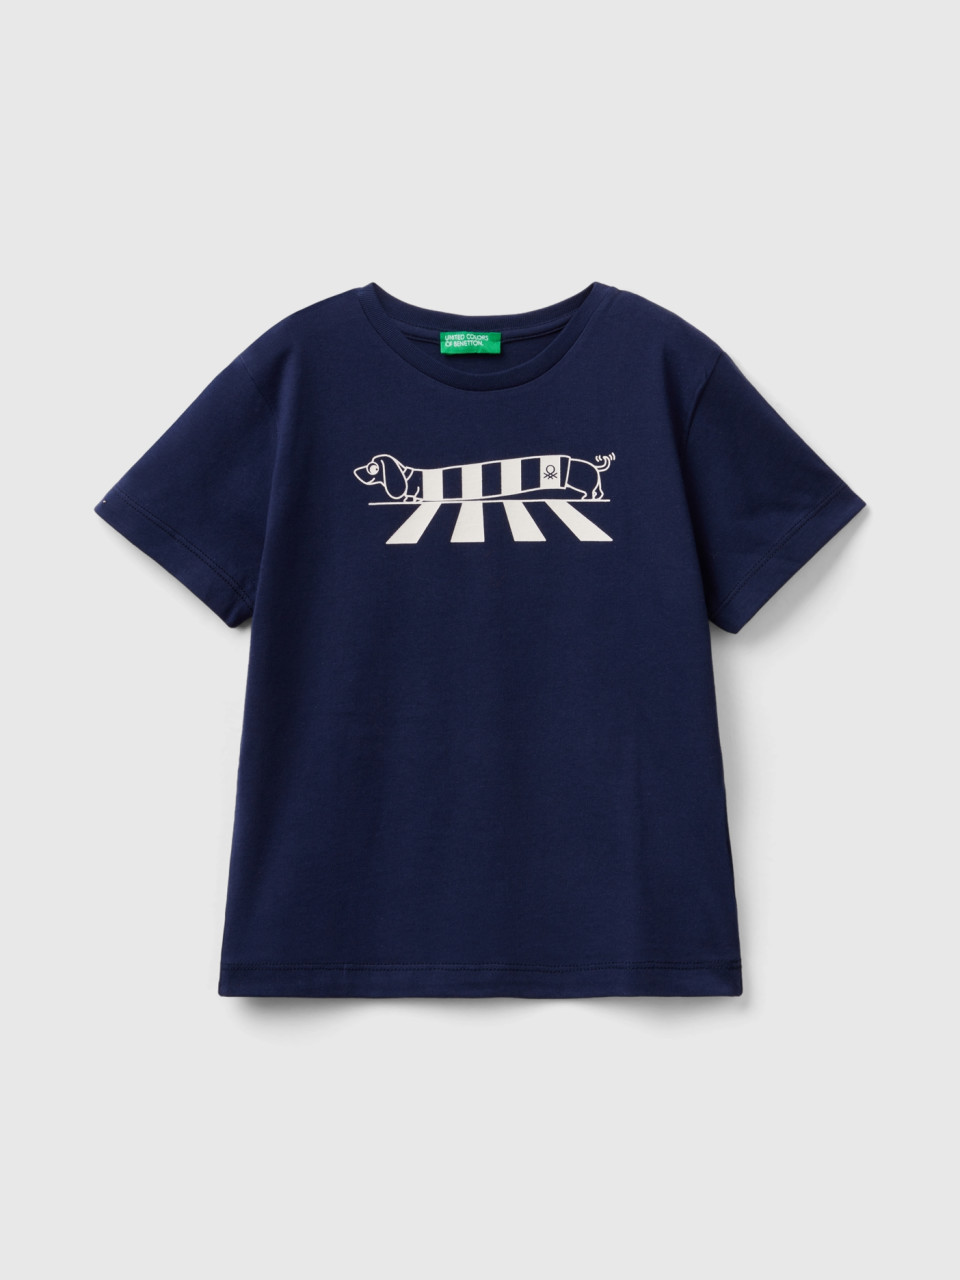 Benetton, T-shirt In Organic Cotton With Print, Dark Blue, Kids